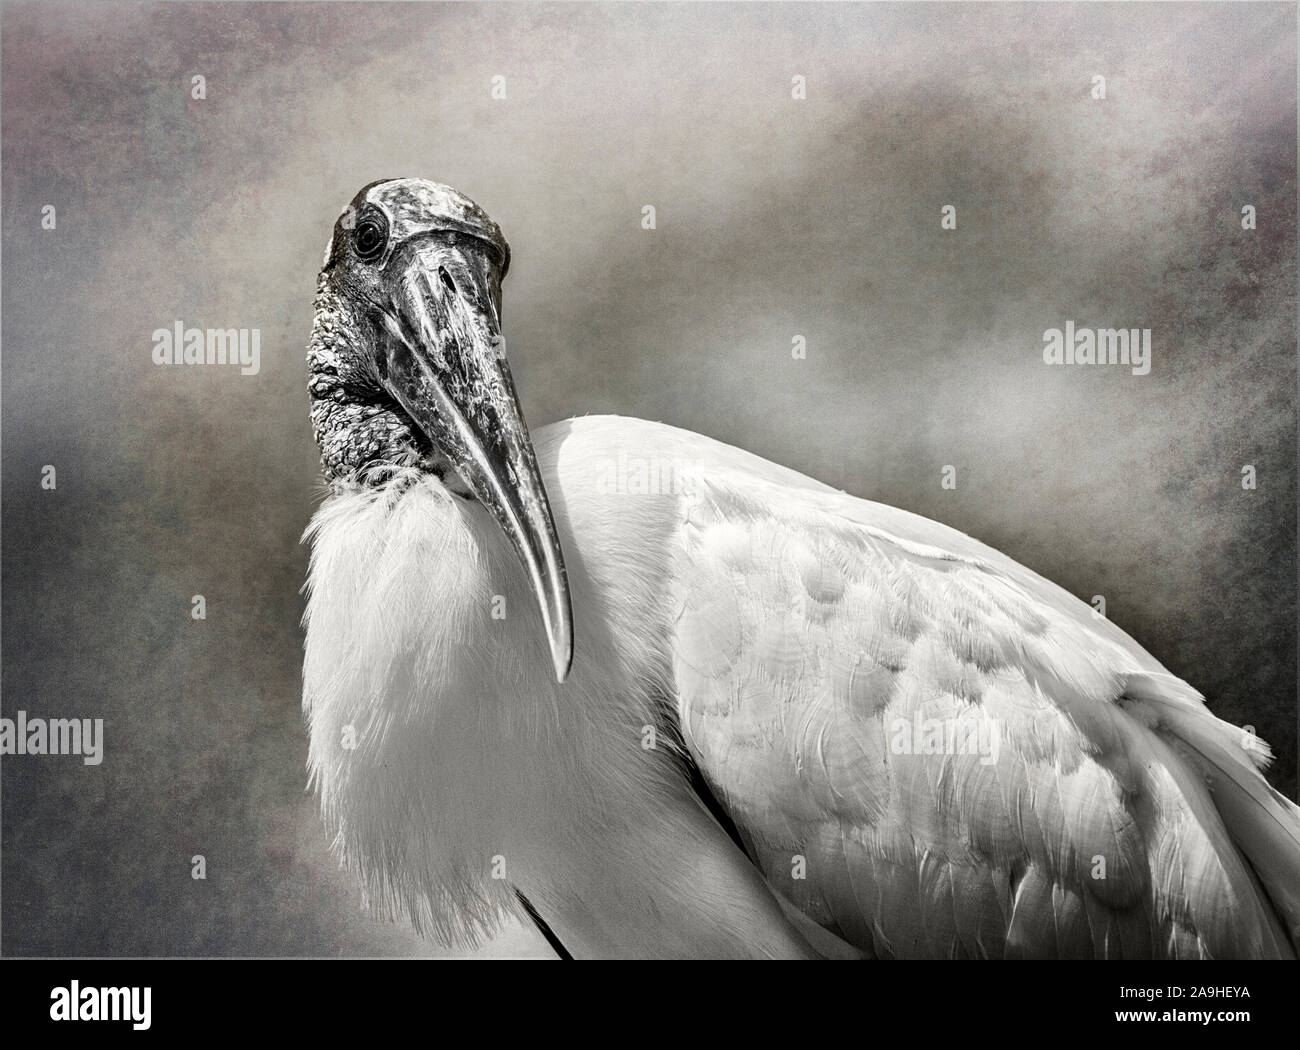 Adult Wood Stork Portrait against textured background Stock Photo